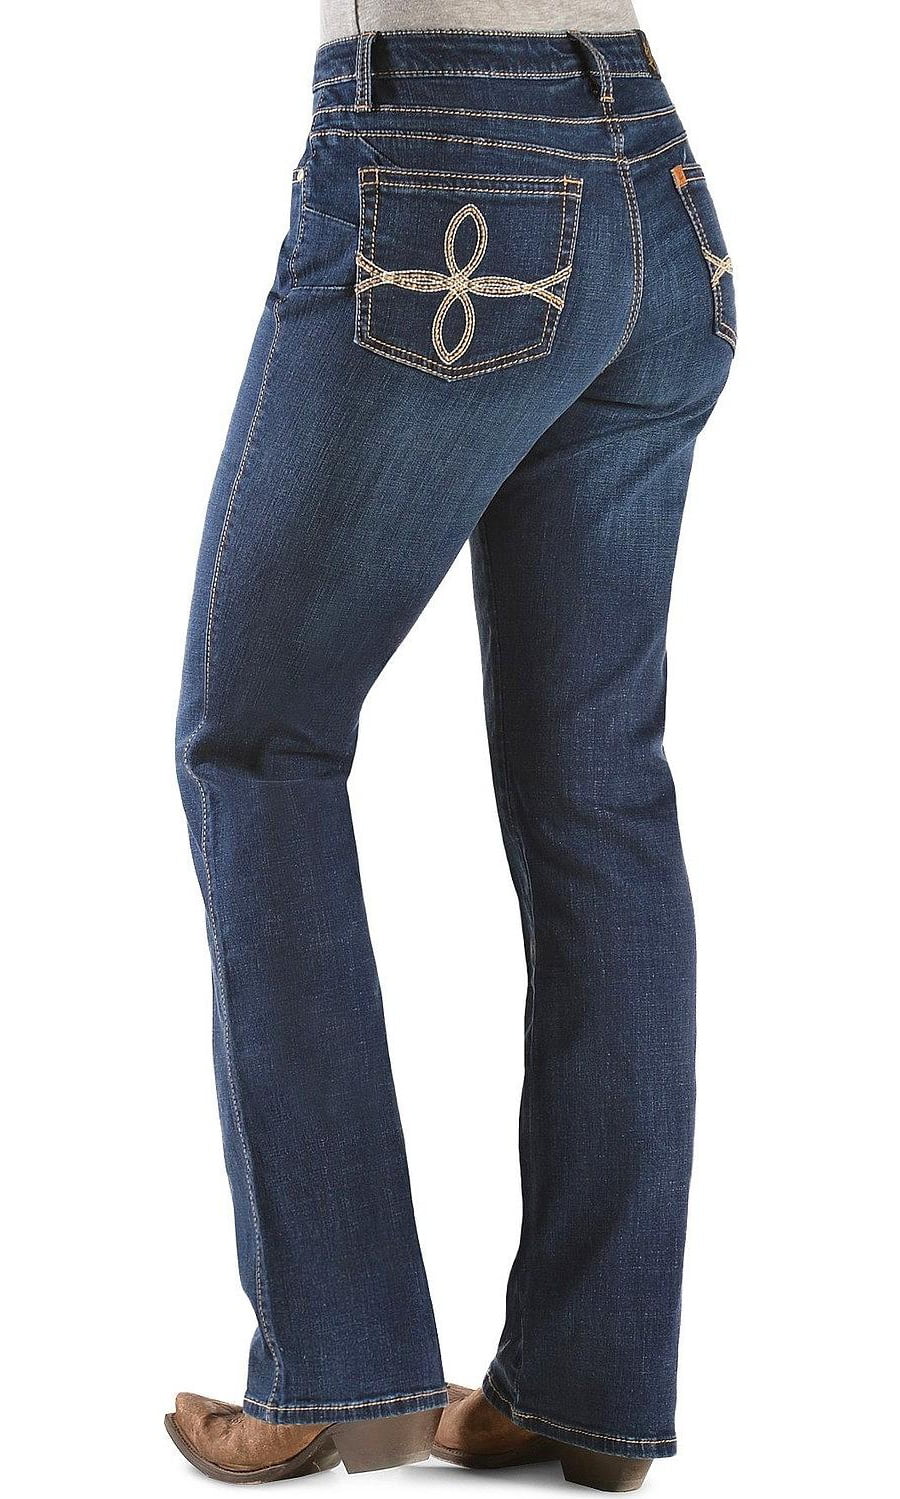 Wrangler - Wrangler Women's Aura Booty Up Jeans - Wub42os - Walmart.com ...